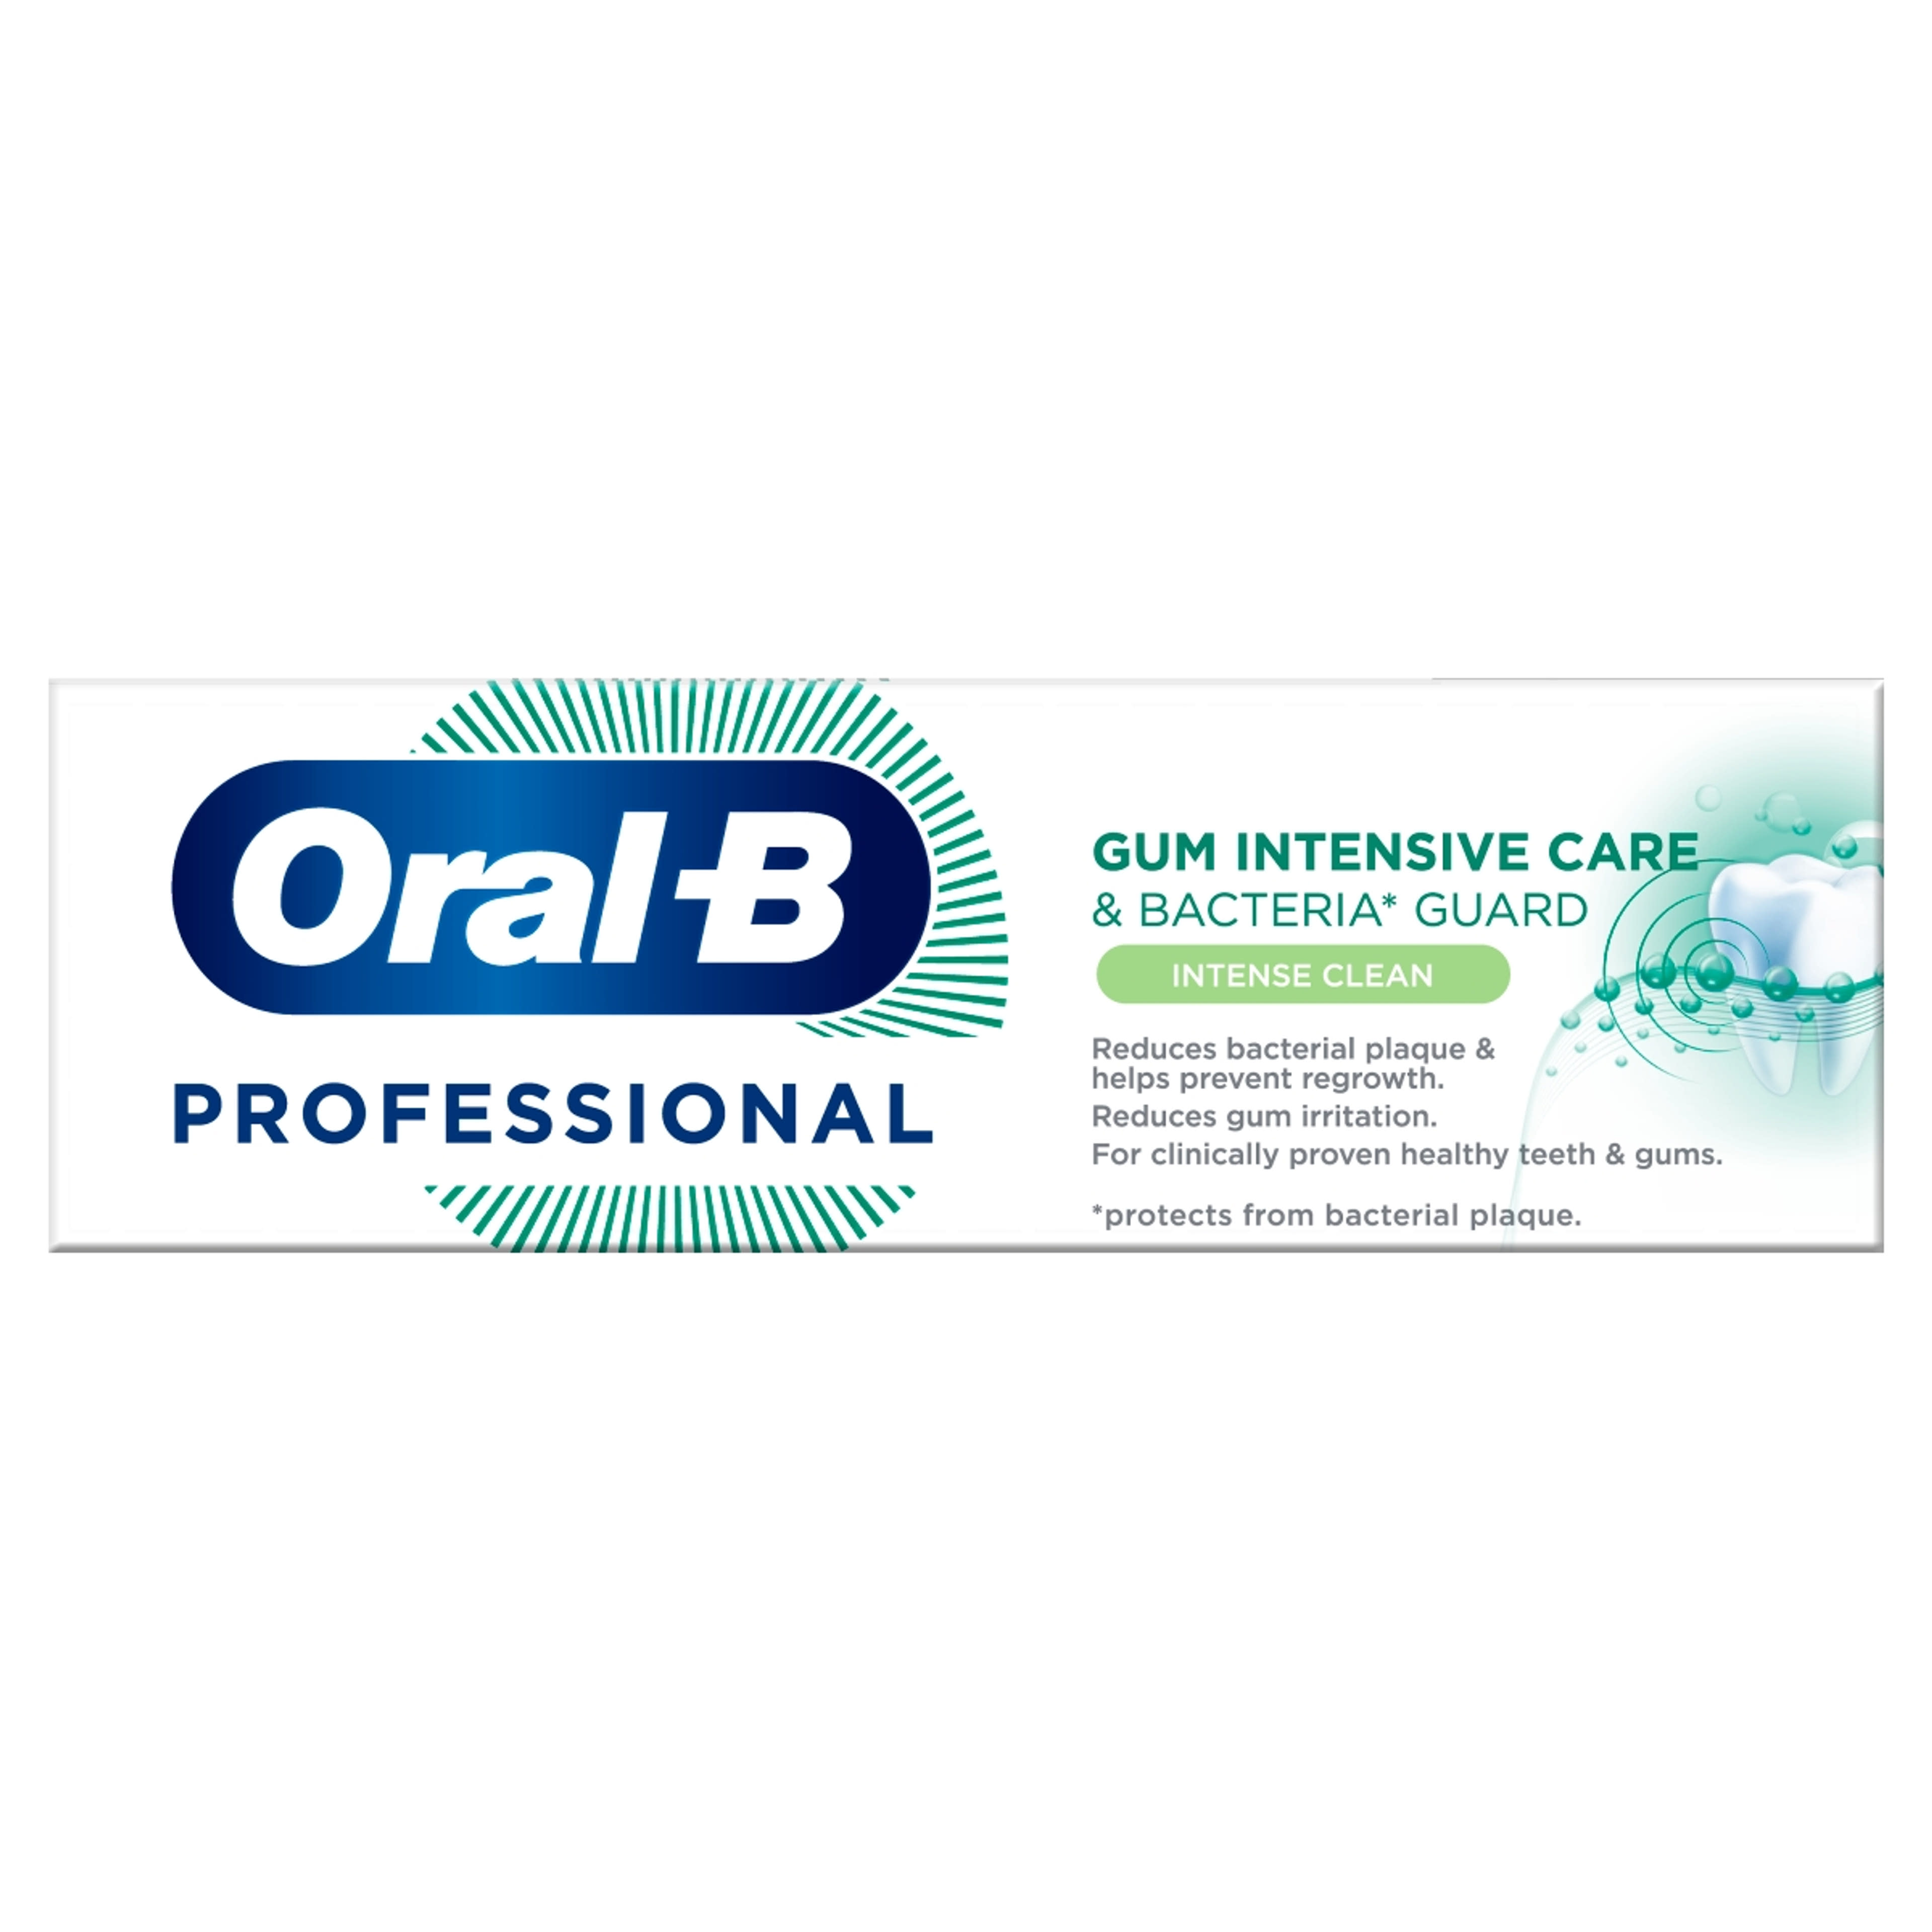 Oral-B Gum Pur Extra Fresh fogkrém - 75 ml